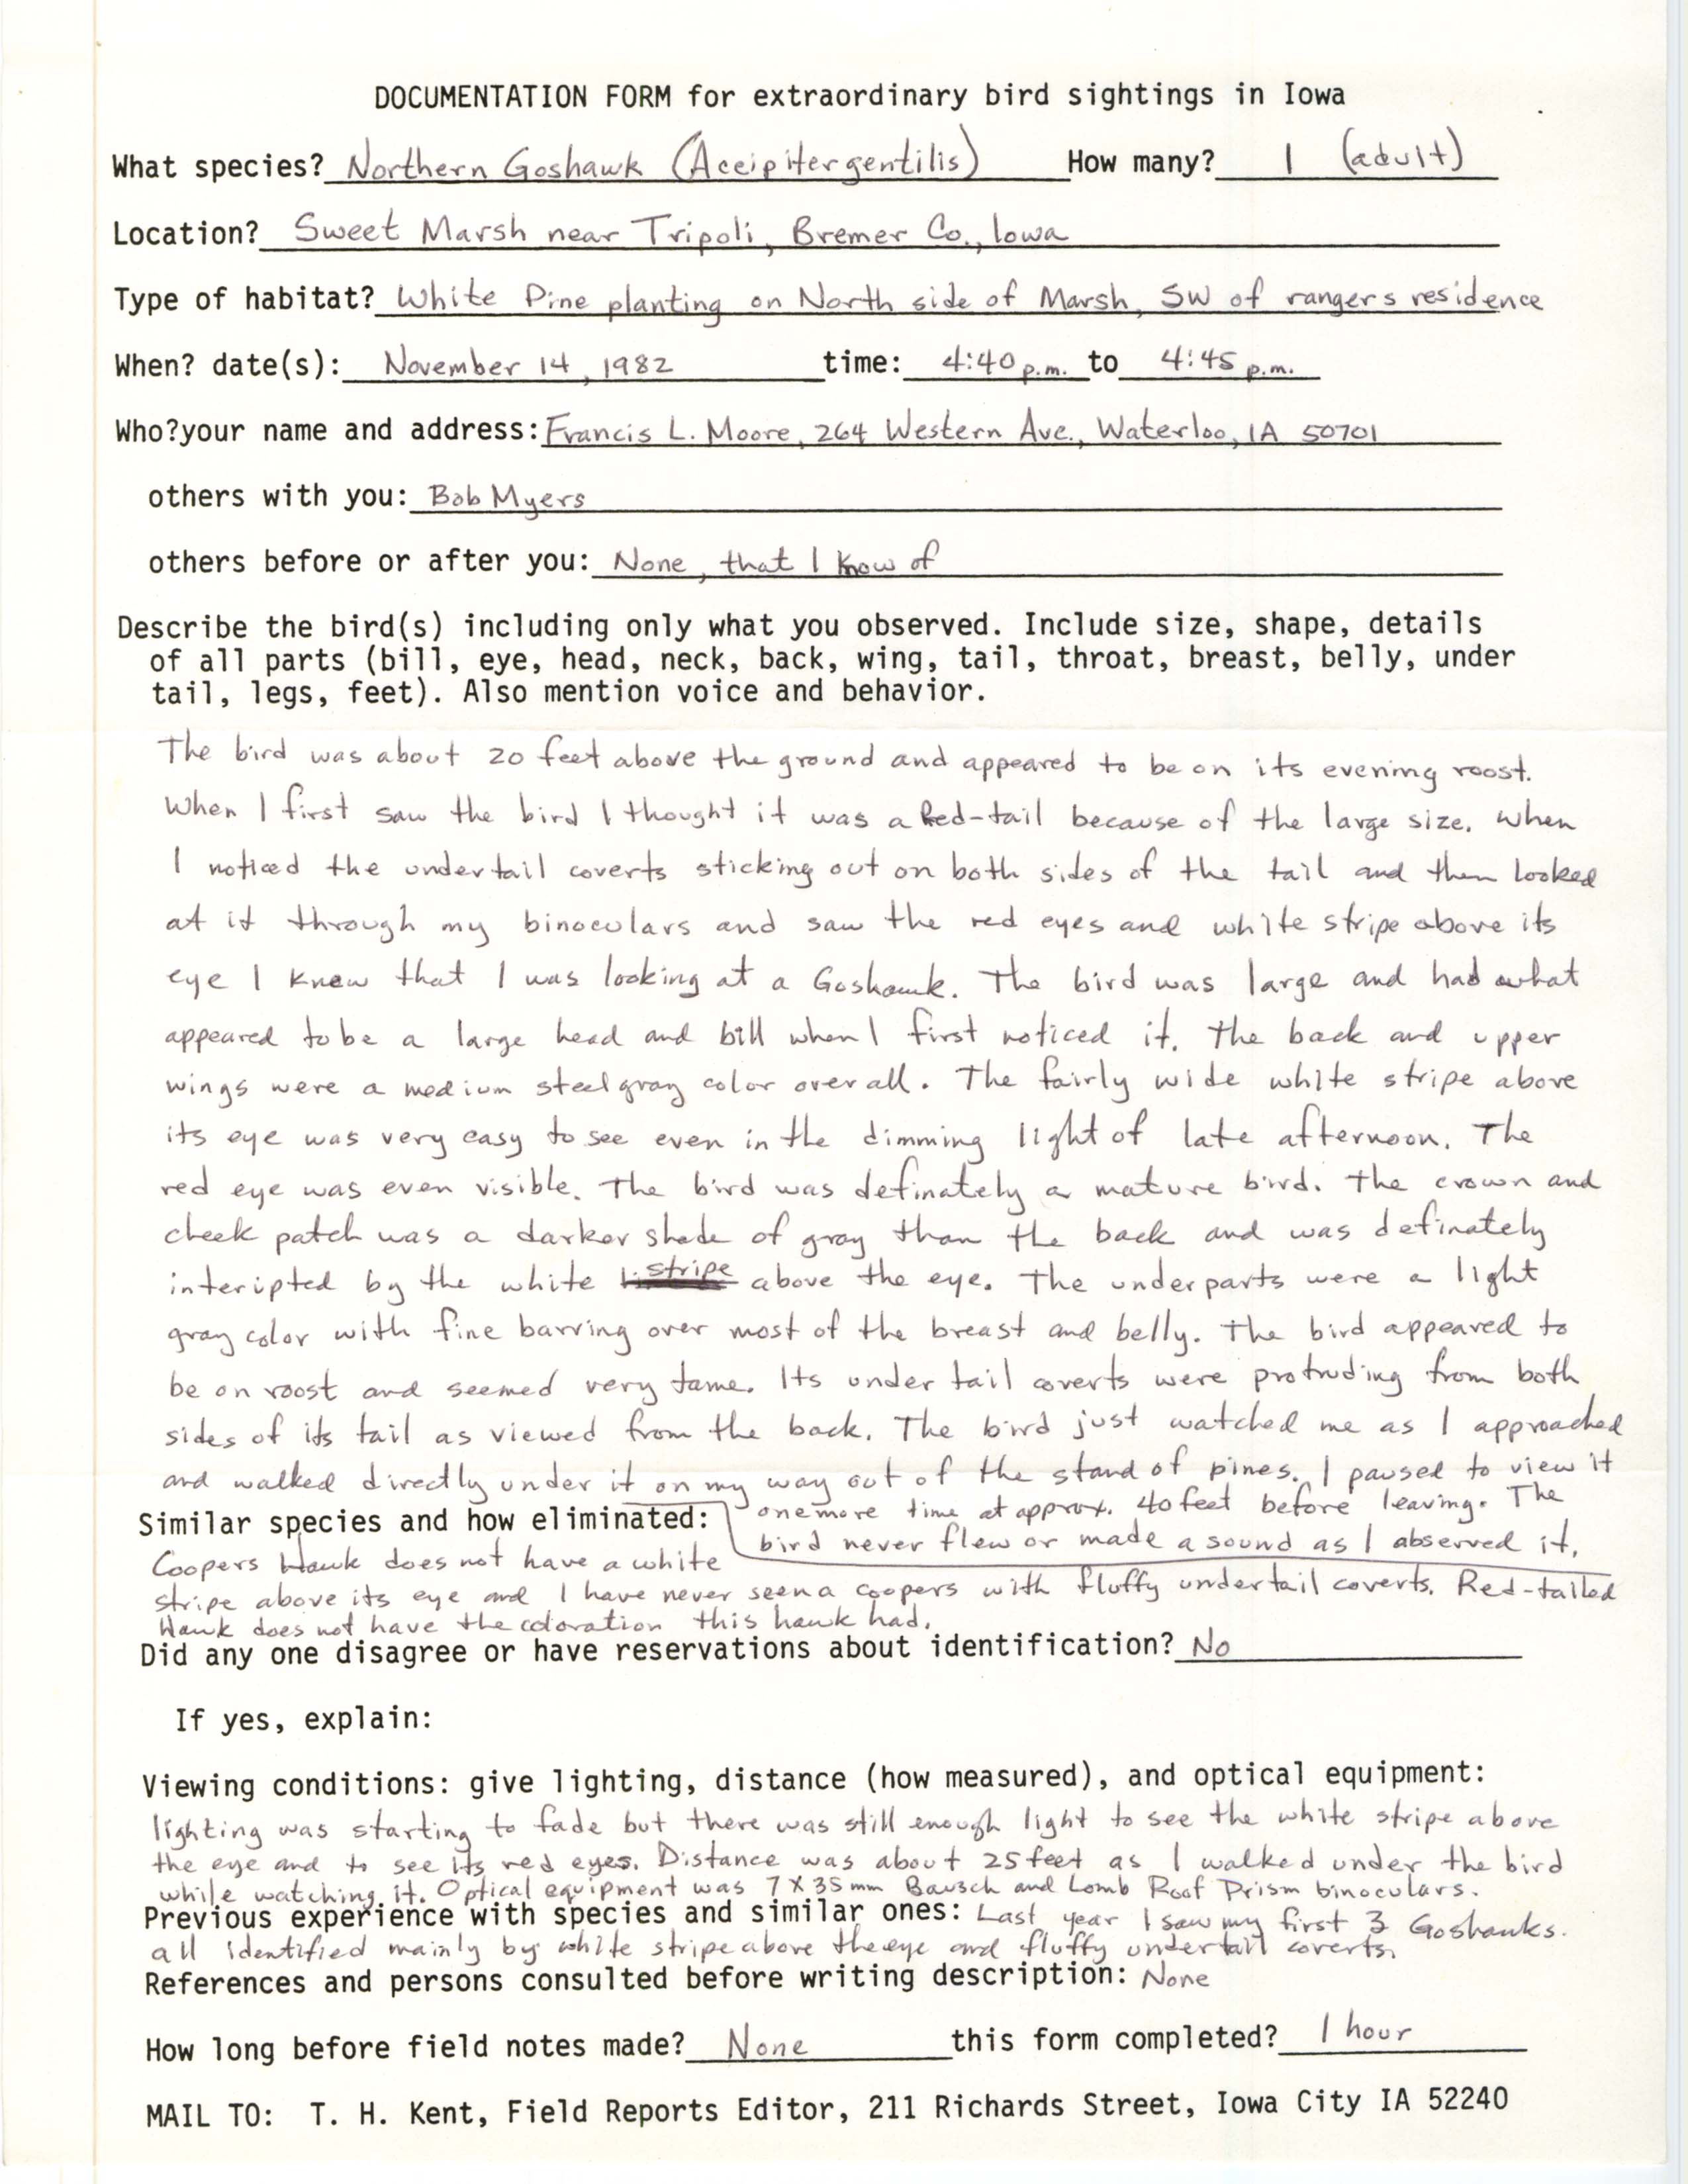 Rare bird documentation form for Northern Goshawk at Sweet Marsh, 1982